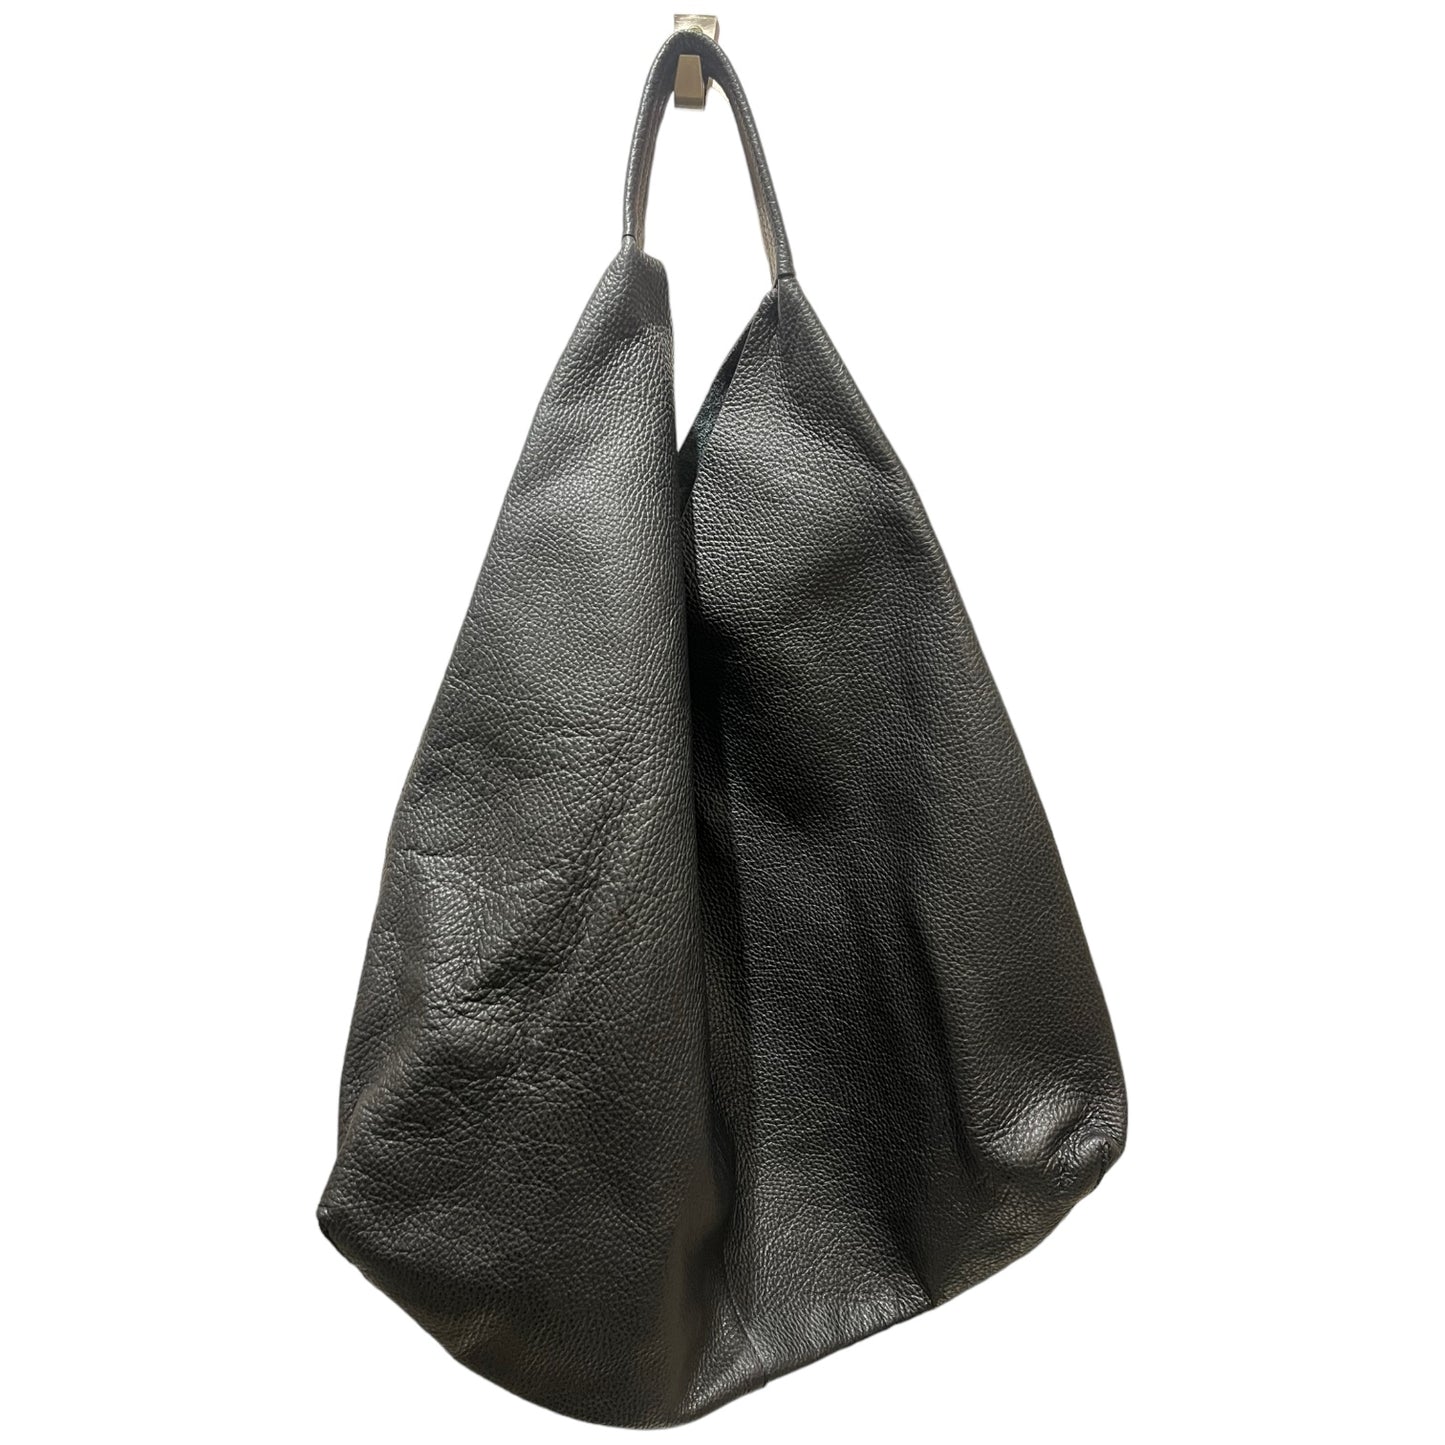 Kurt Geiger Black Tote Bag - NEW